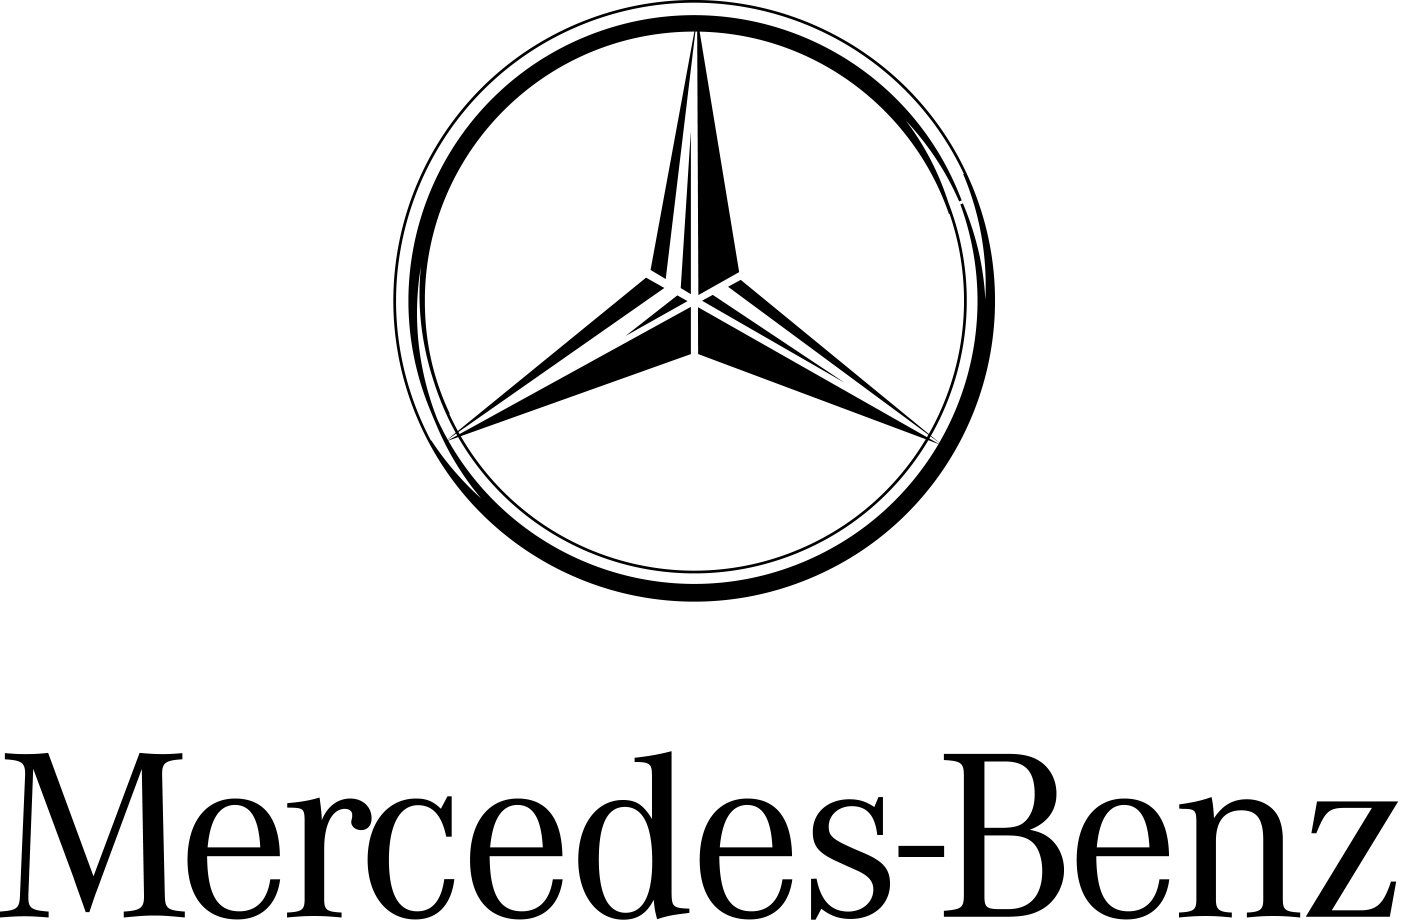 mercedes-logo.jpg